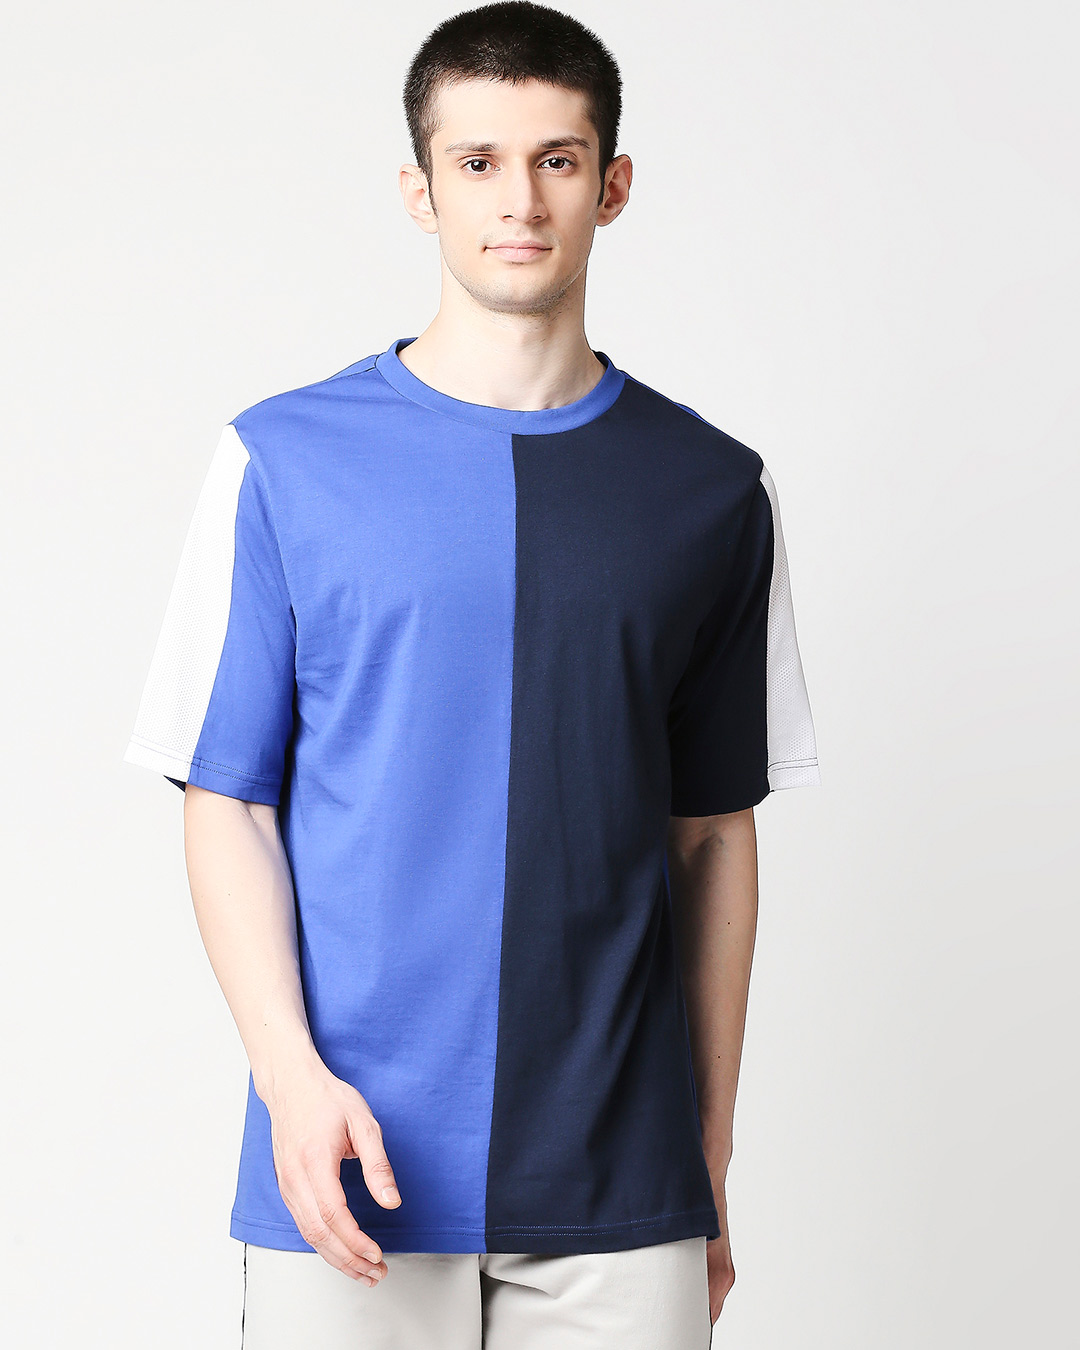 Shop Dazzling Blue Half and Half T-Shirt-Back